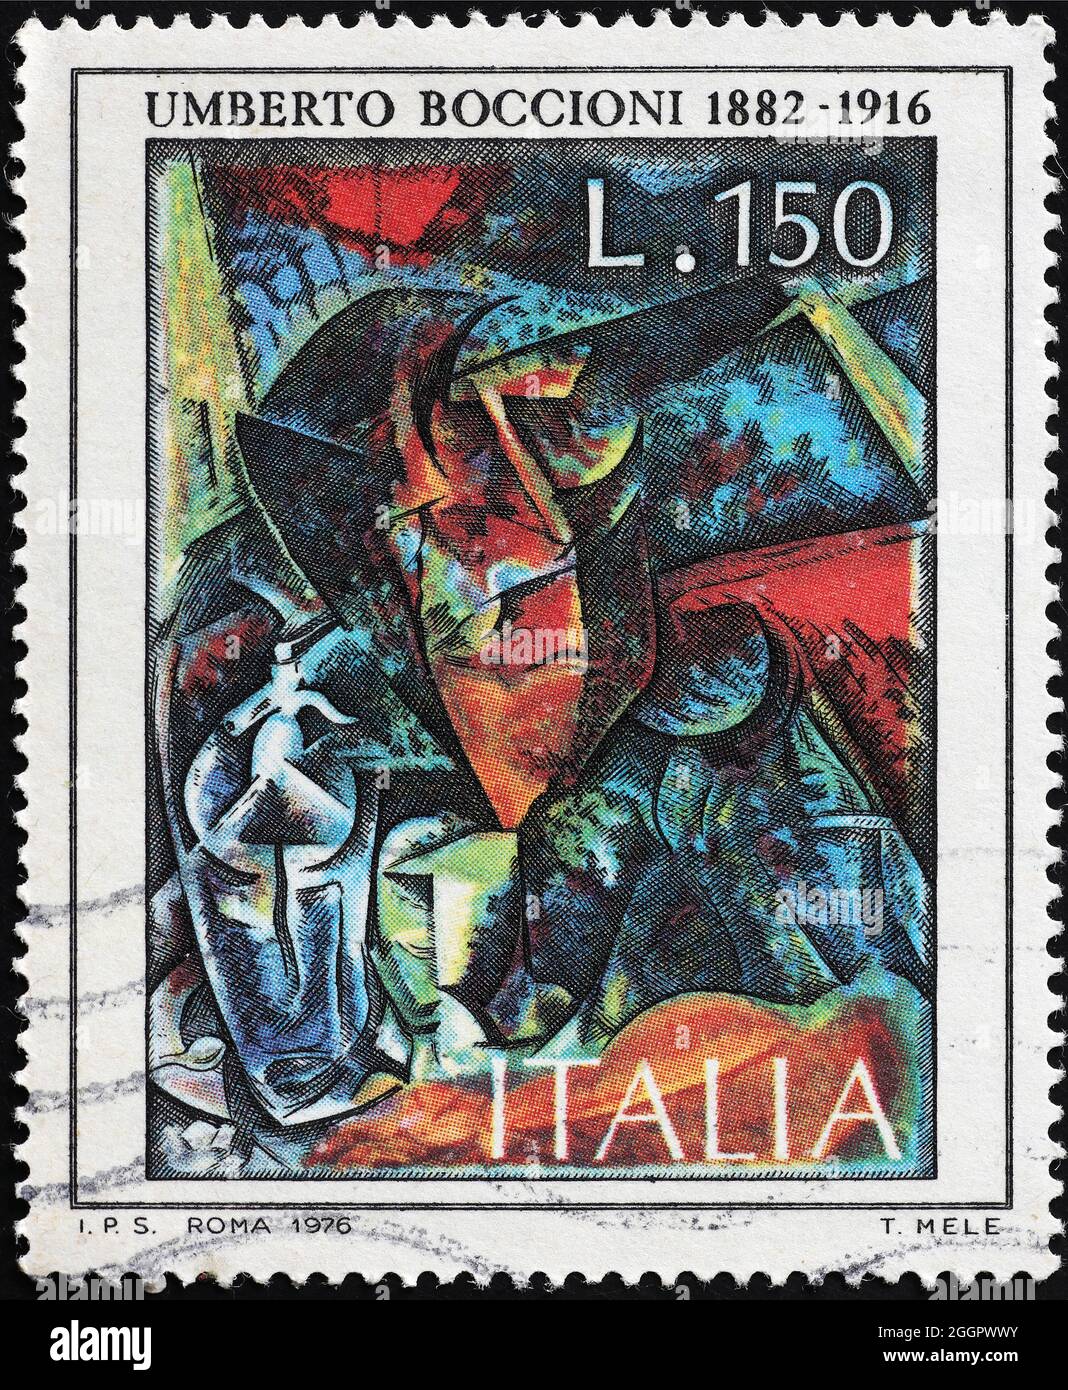 Painting by Umberto Boccioni on italian postage stamp Stock Photo